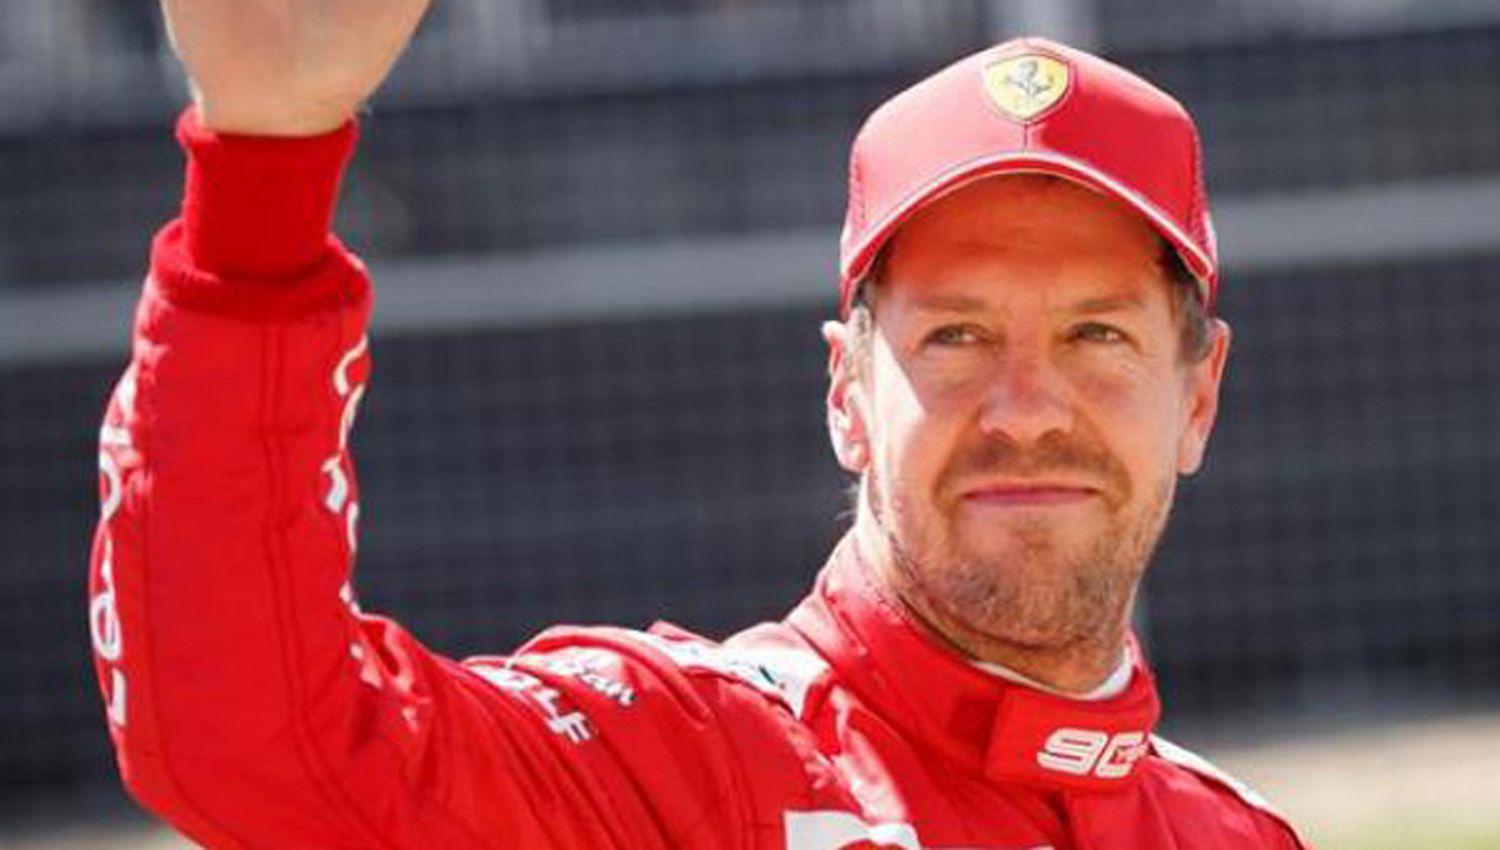 Racing Point no sumaraacute a Sebastian Vettel al equipo